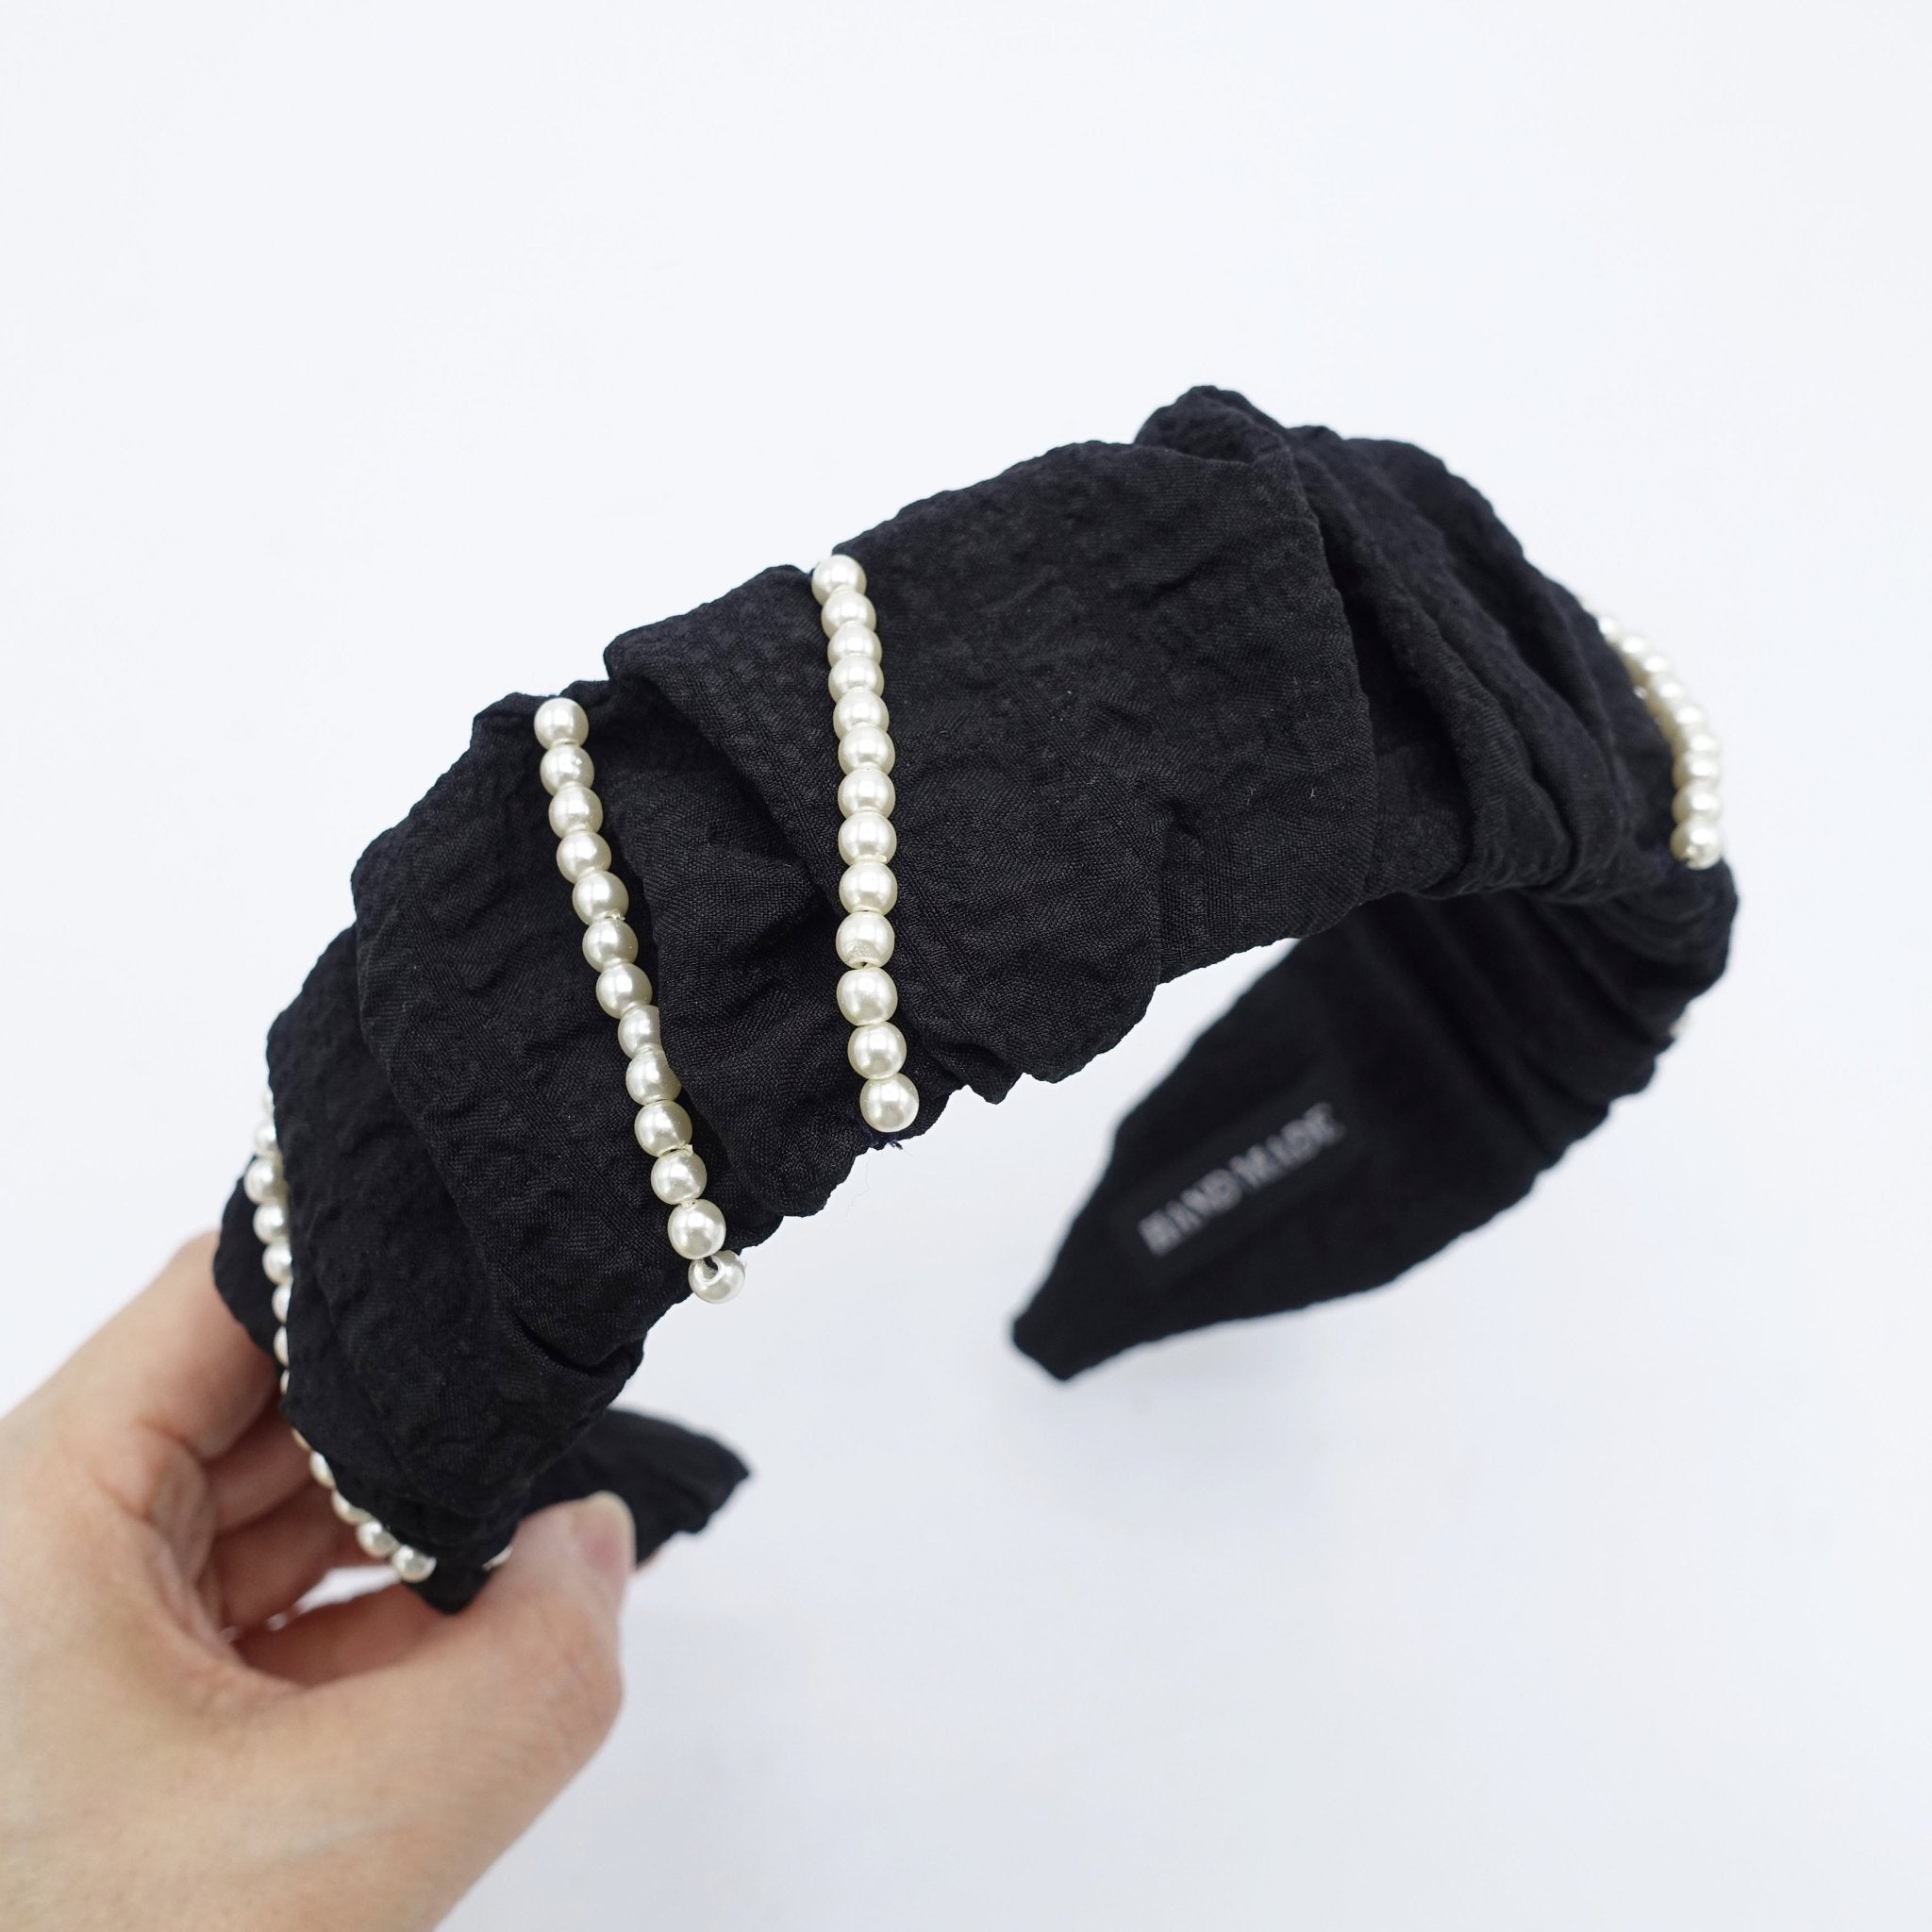 veryshine.com hairband/headband Black pleated headband pearl beaded ornaments embellished hairband crinkled fabric hair accessory